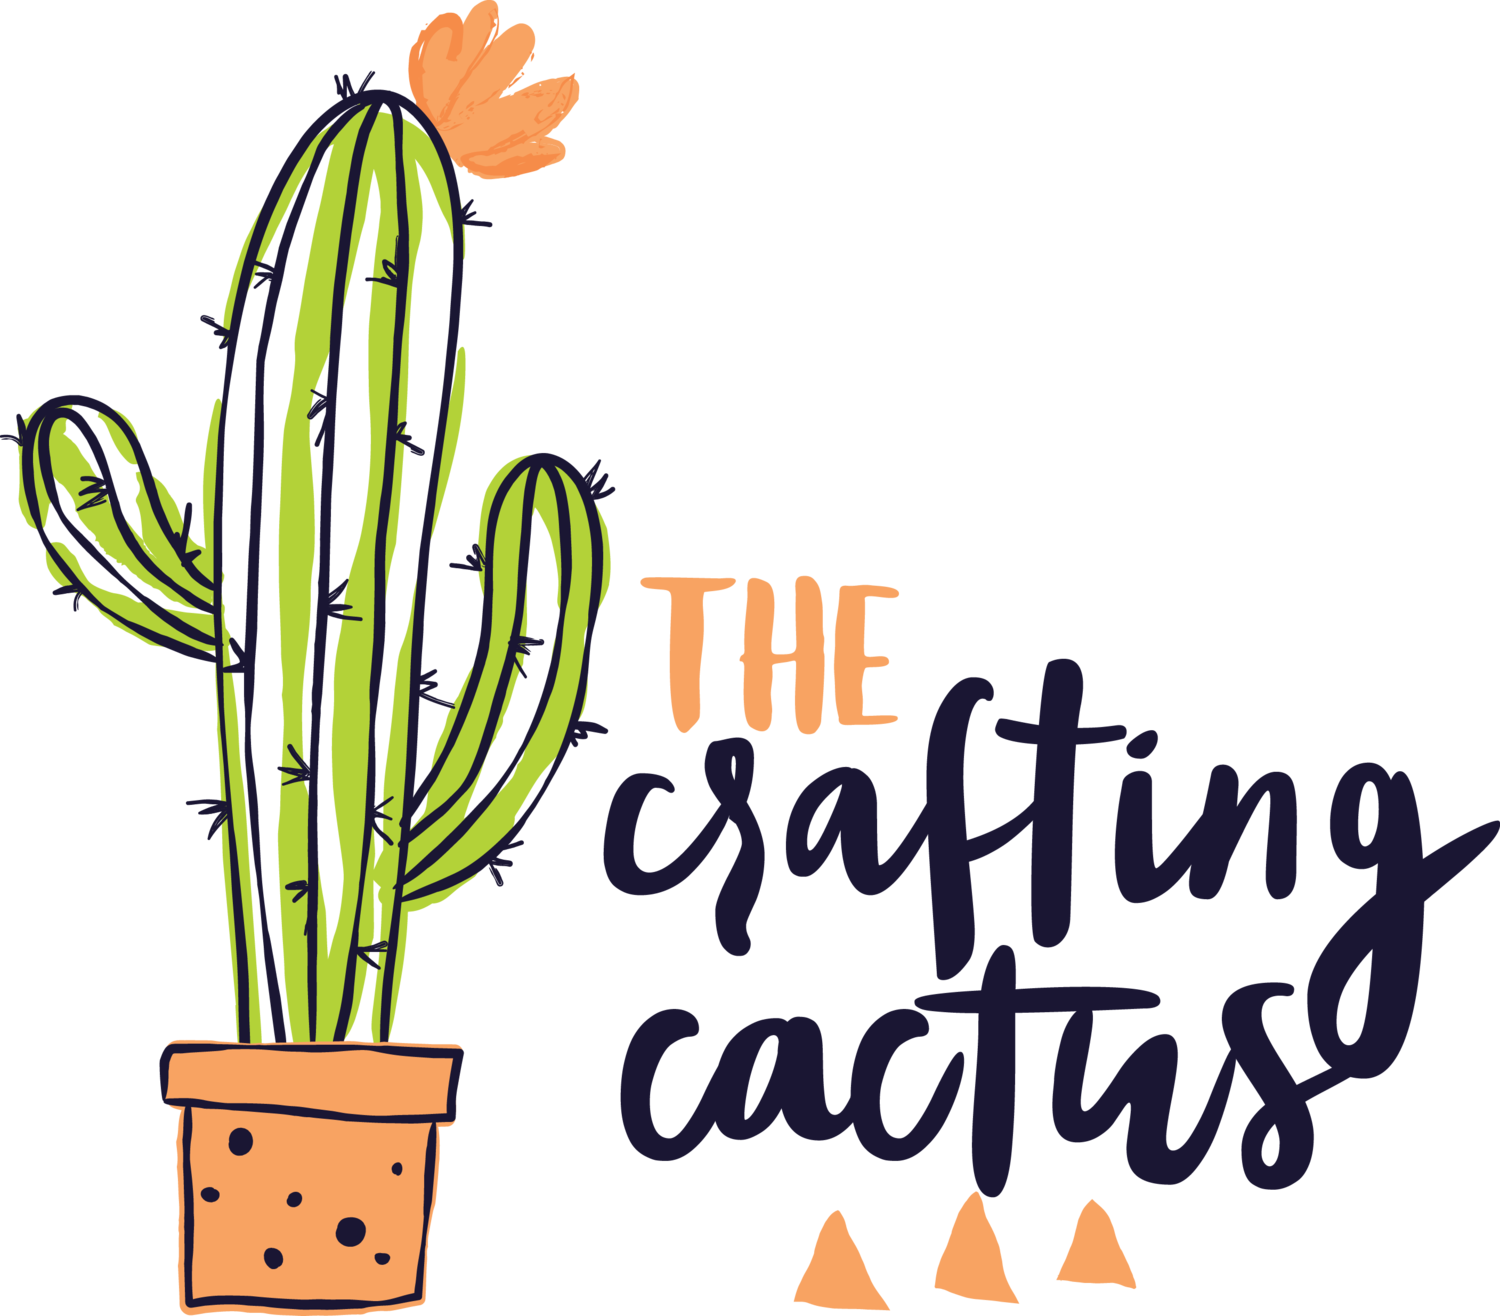 The Crafting Cactus